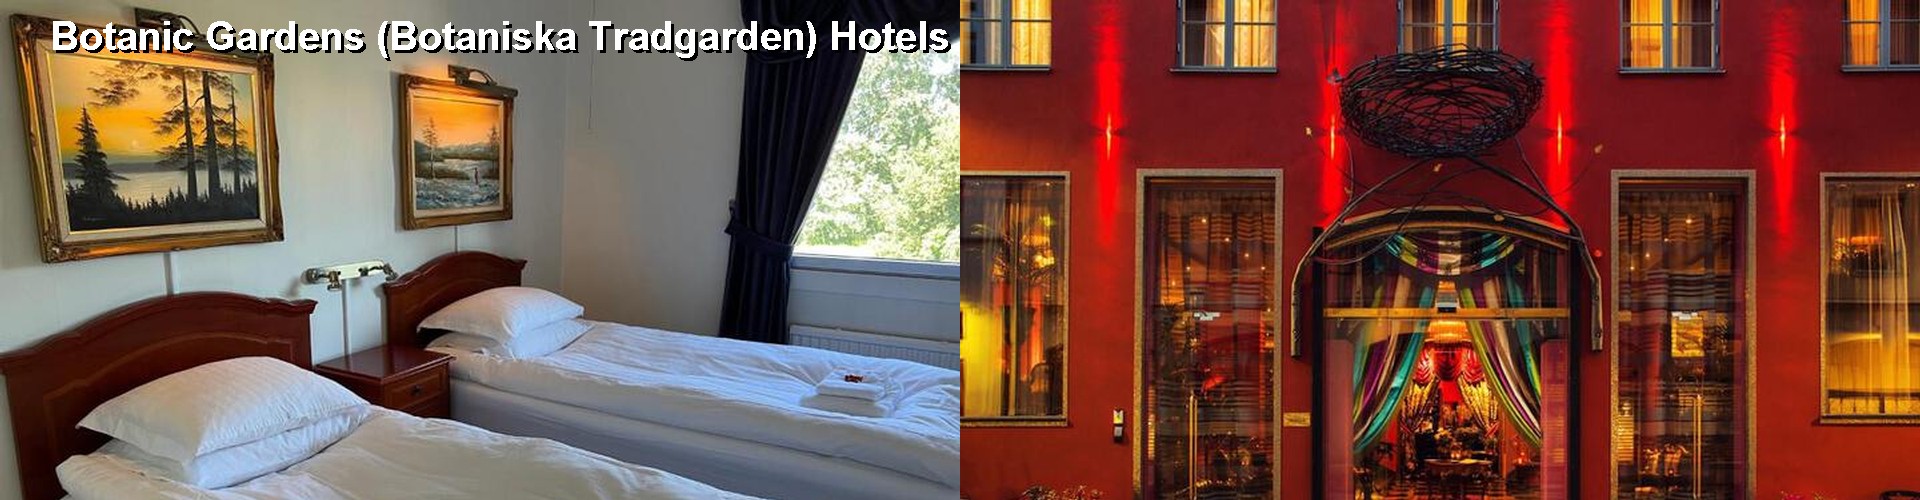 5 Best Hotels near Botanic Gardens (Botaniska Tradgarden)